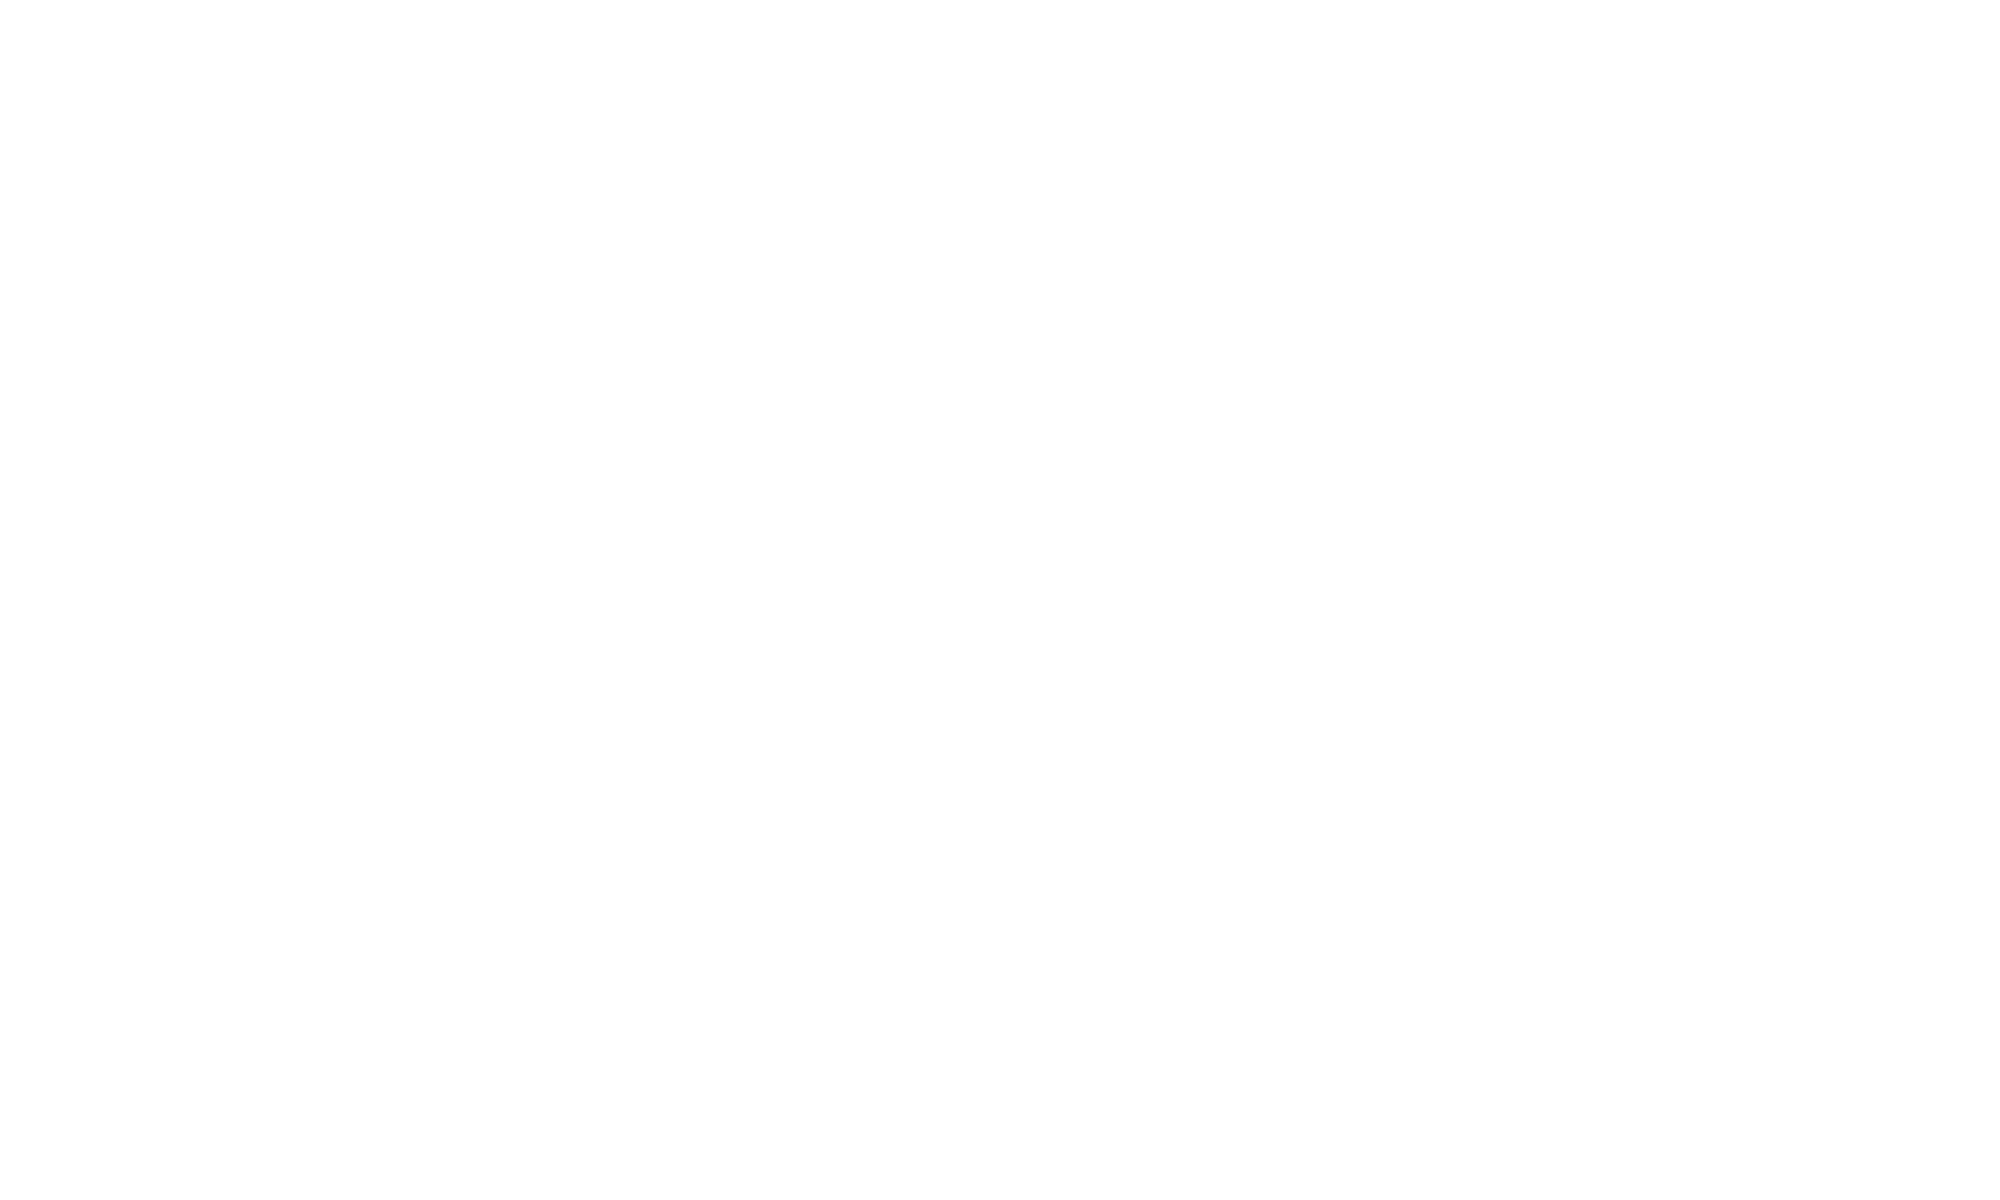 British Geological Survey